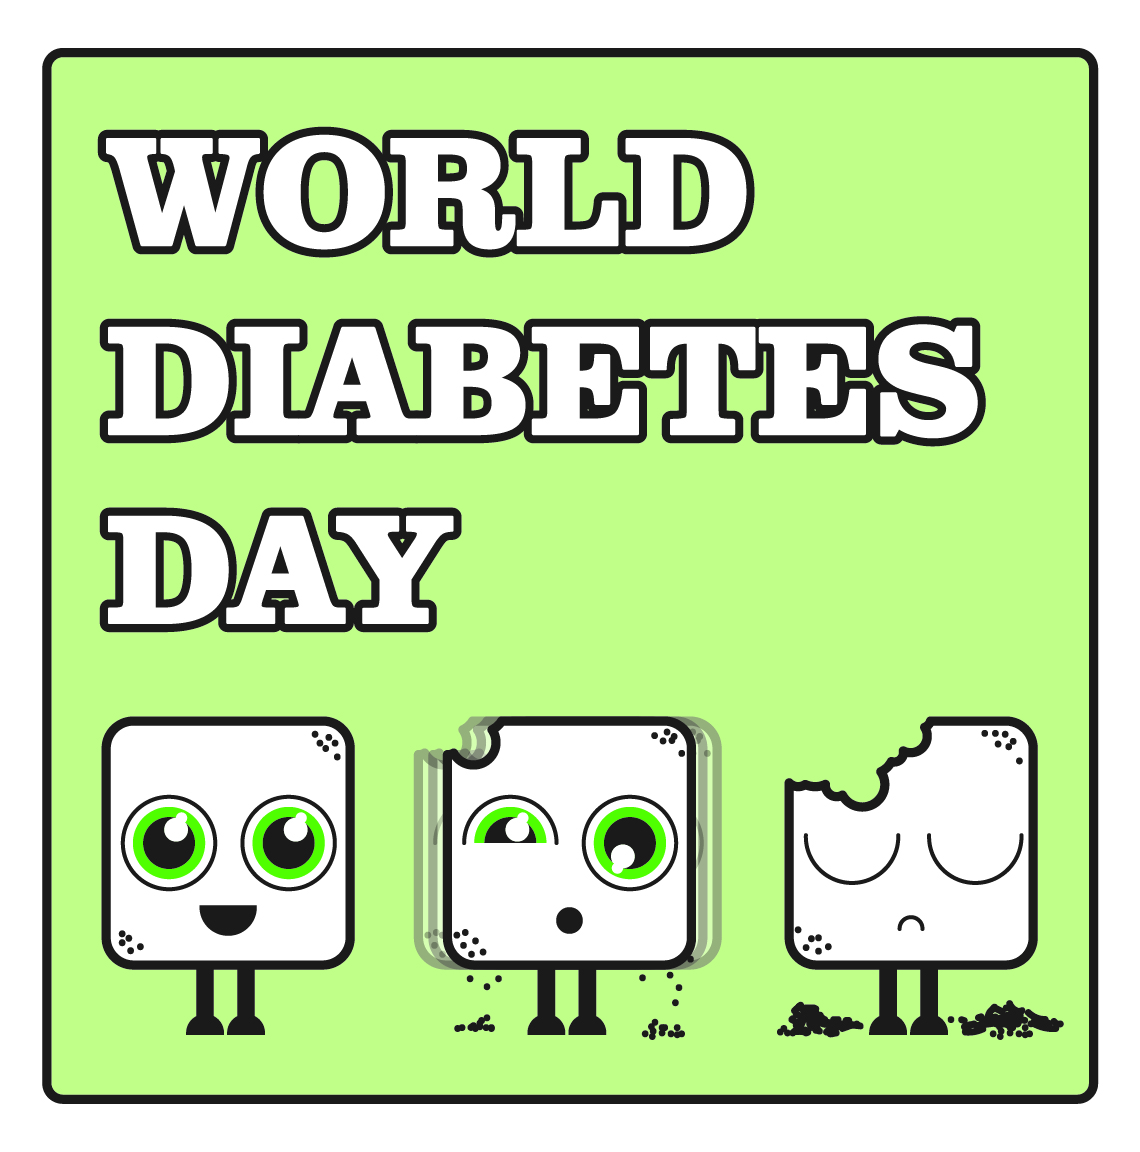 World Diabetes Day Sugar Cubes Illustration